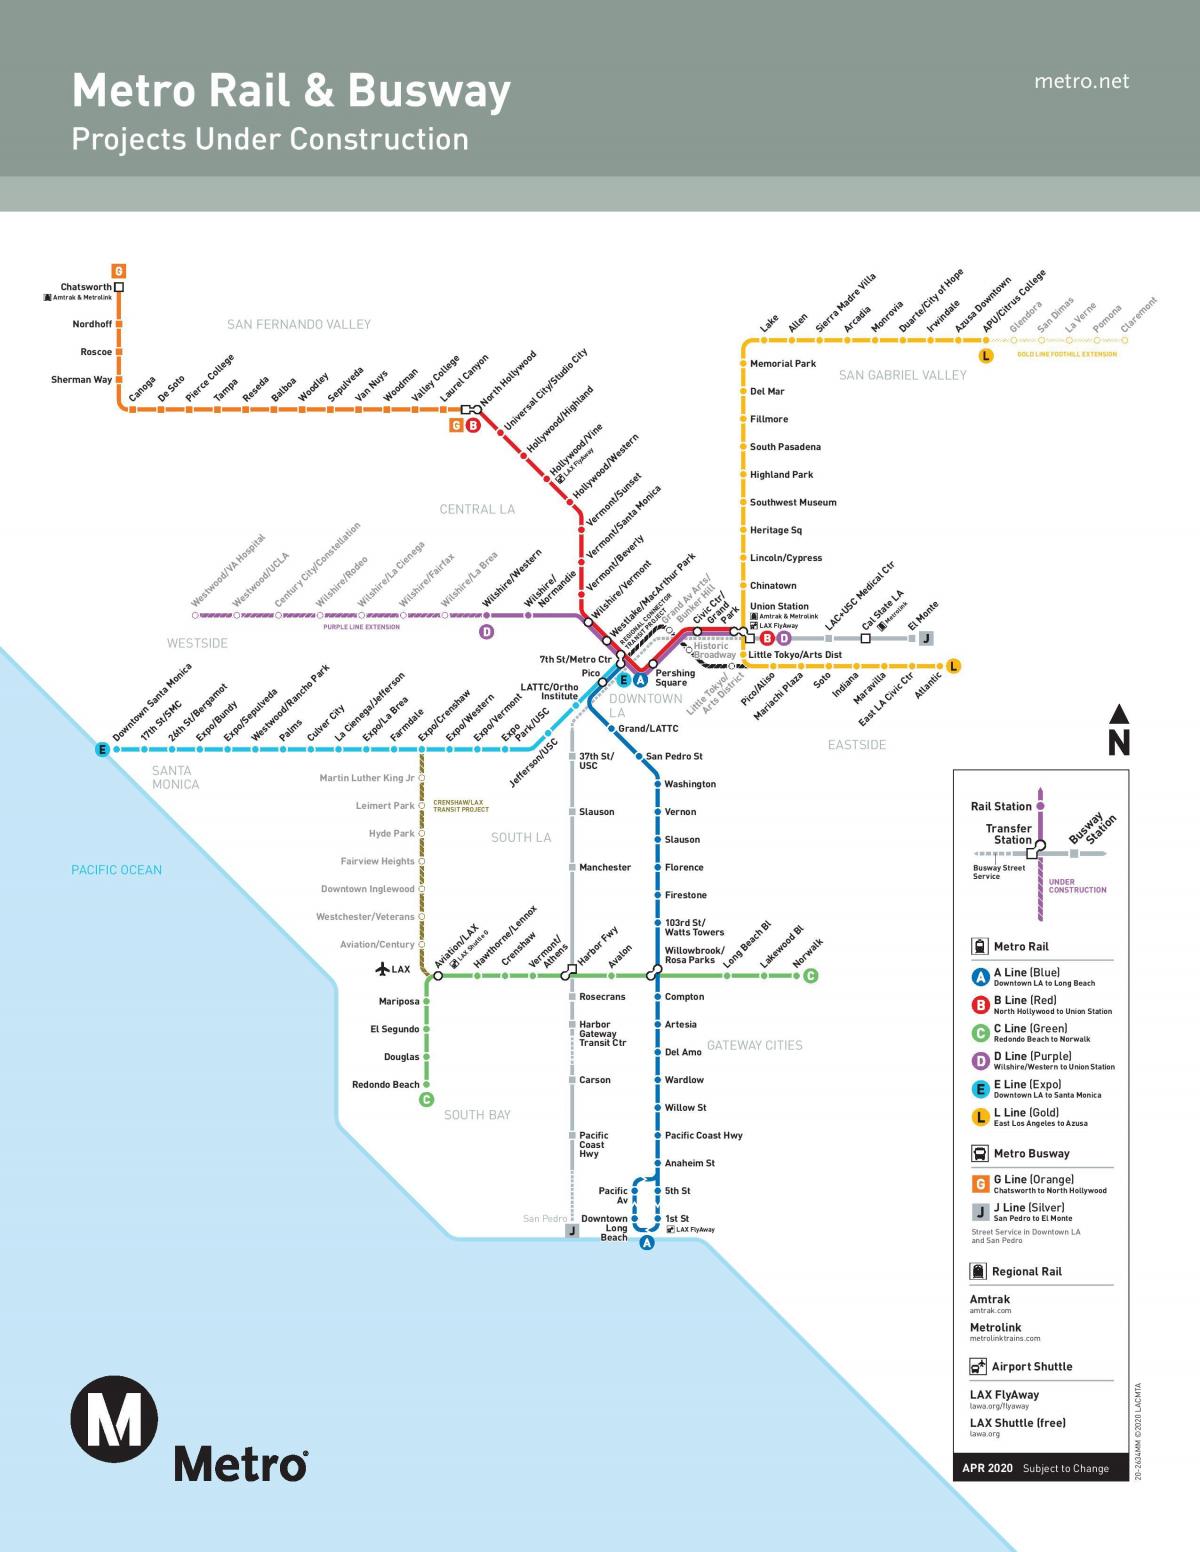 Los Angeles metro future anzeigen